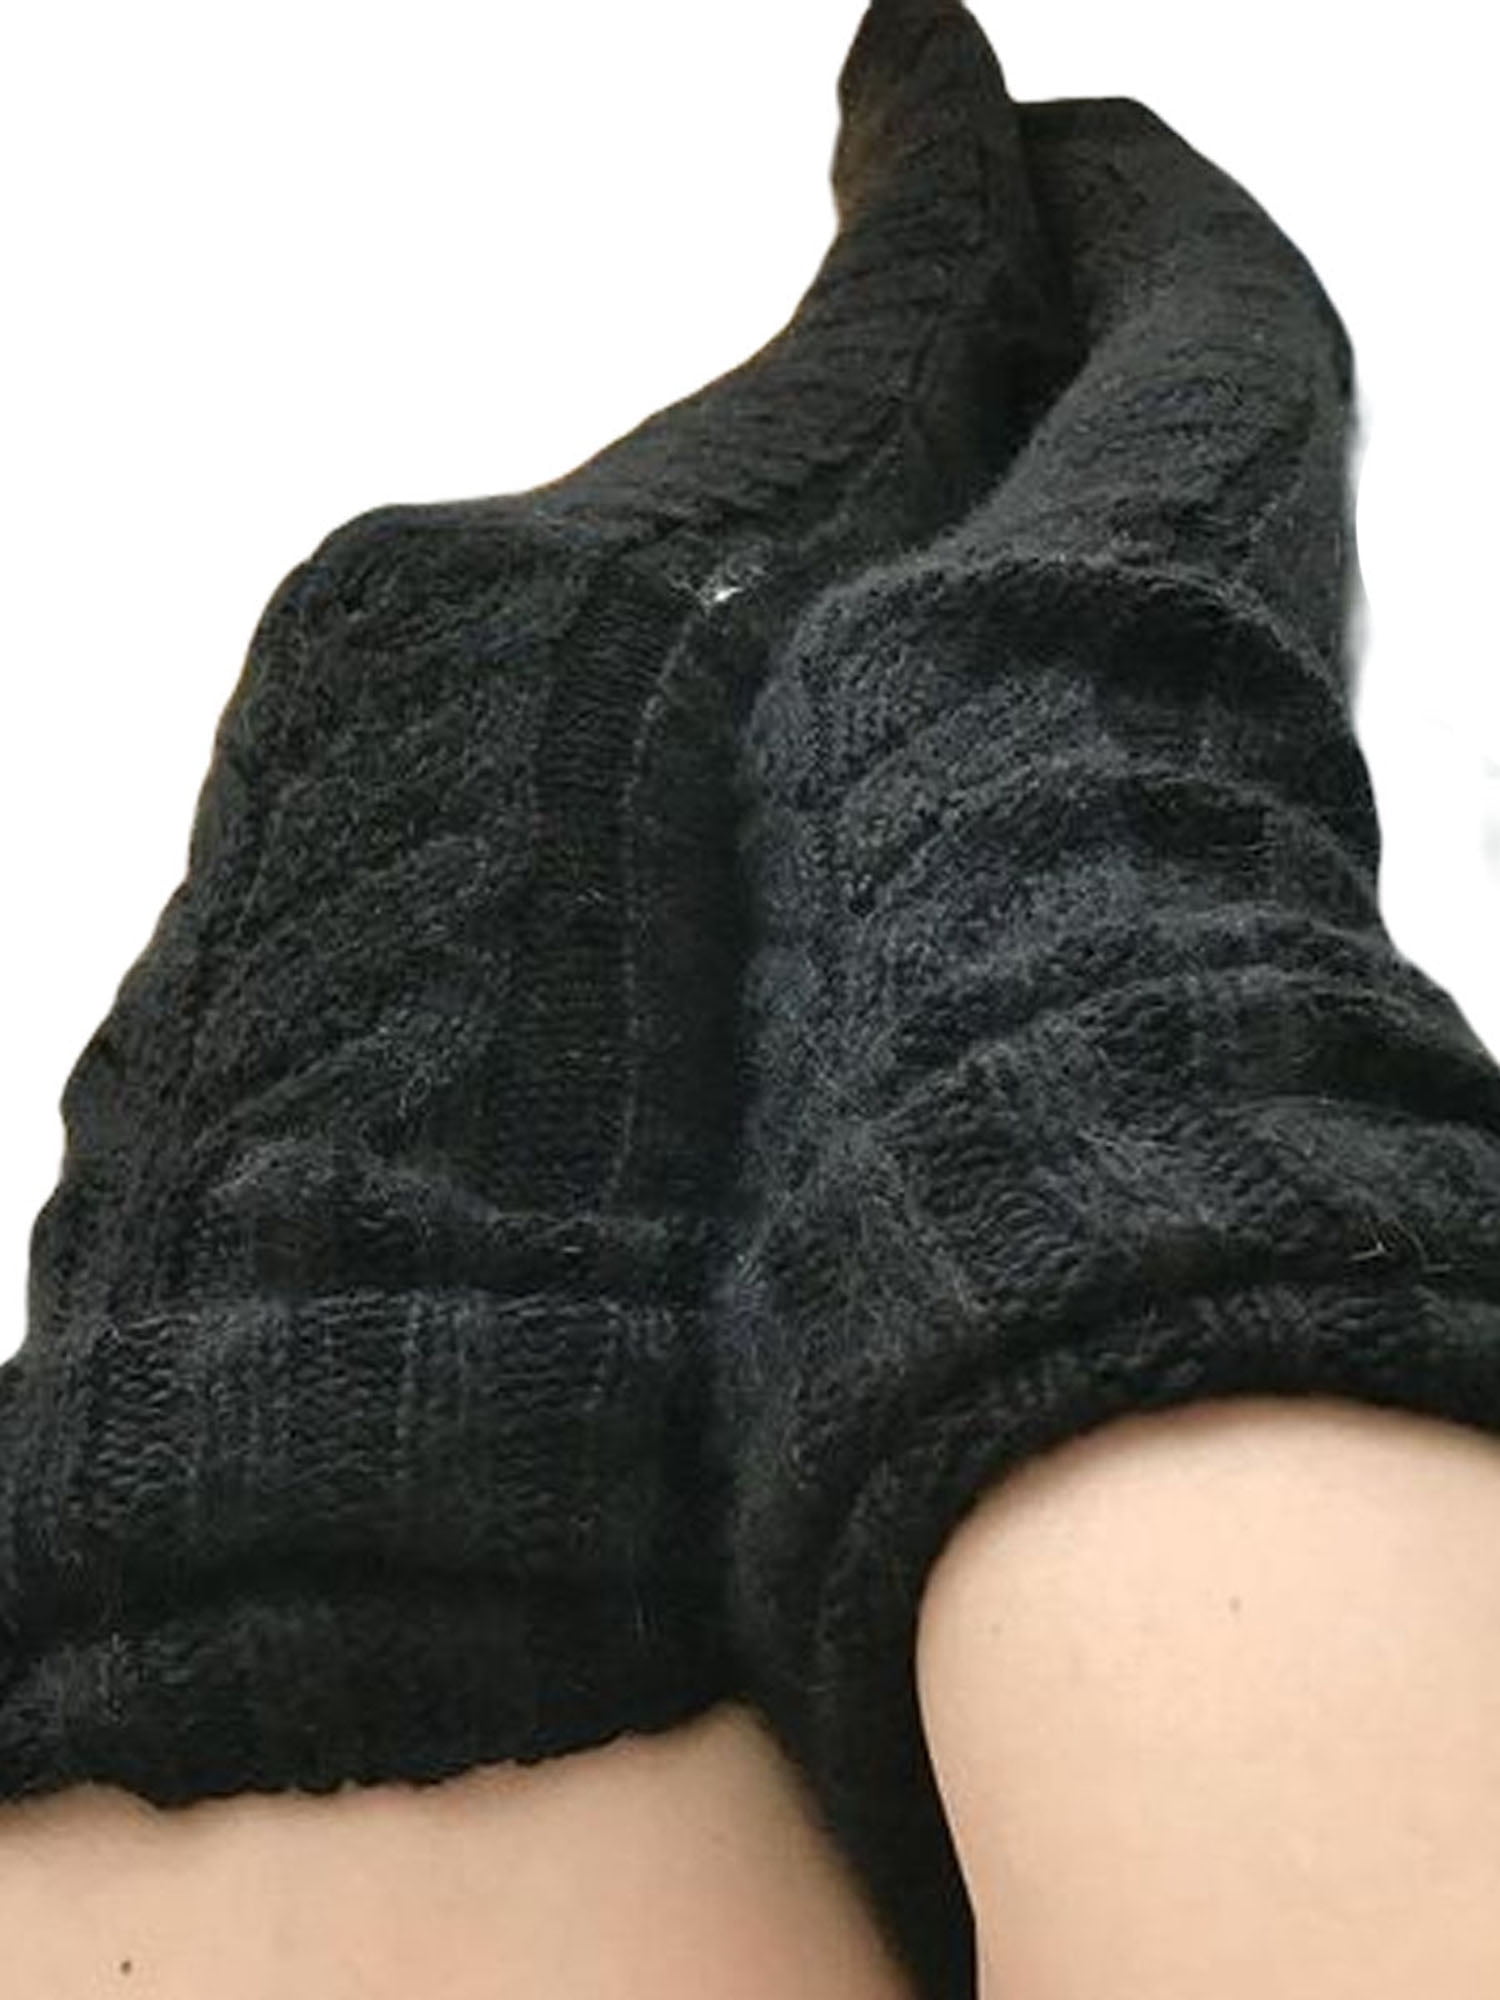 Woolen Natural wool thermal socks Knitted woolen socks Hand knitted sock